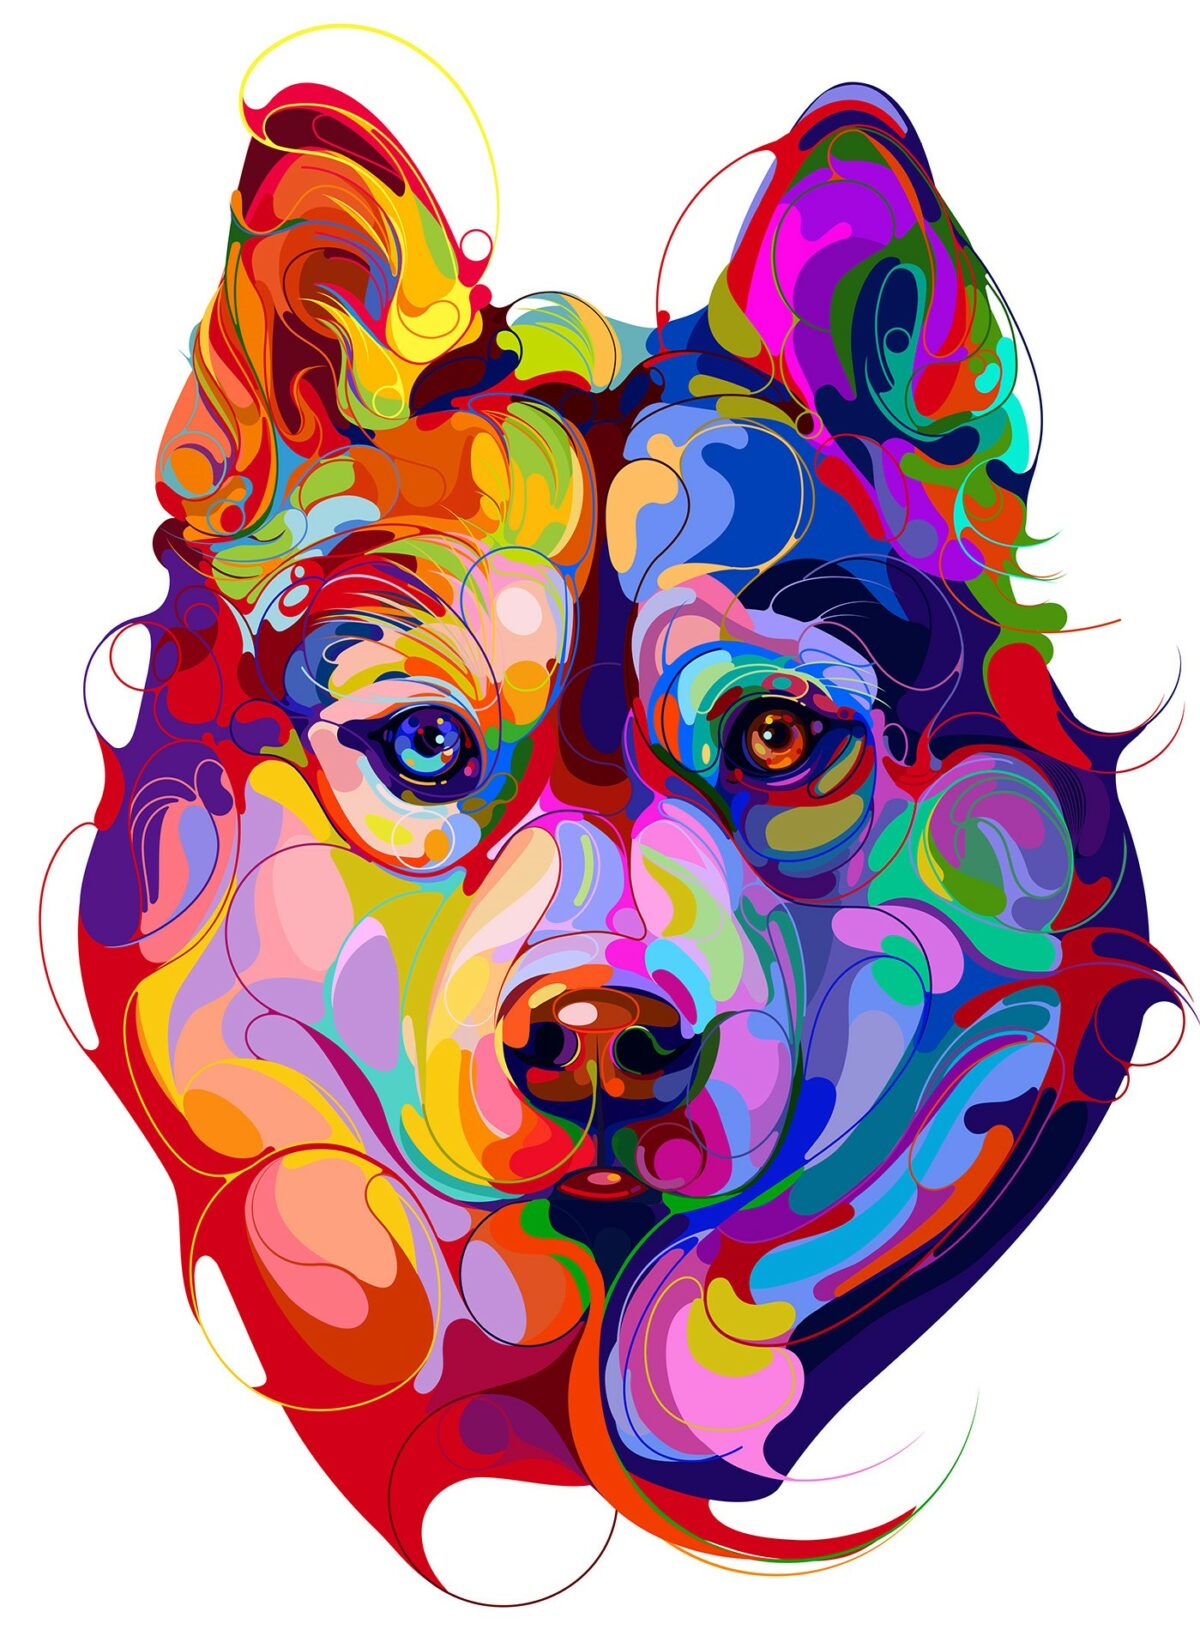 Kaleidoscopic Illustrations Of Expressive Dogs By Marina Okhromenko 7